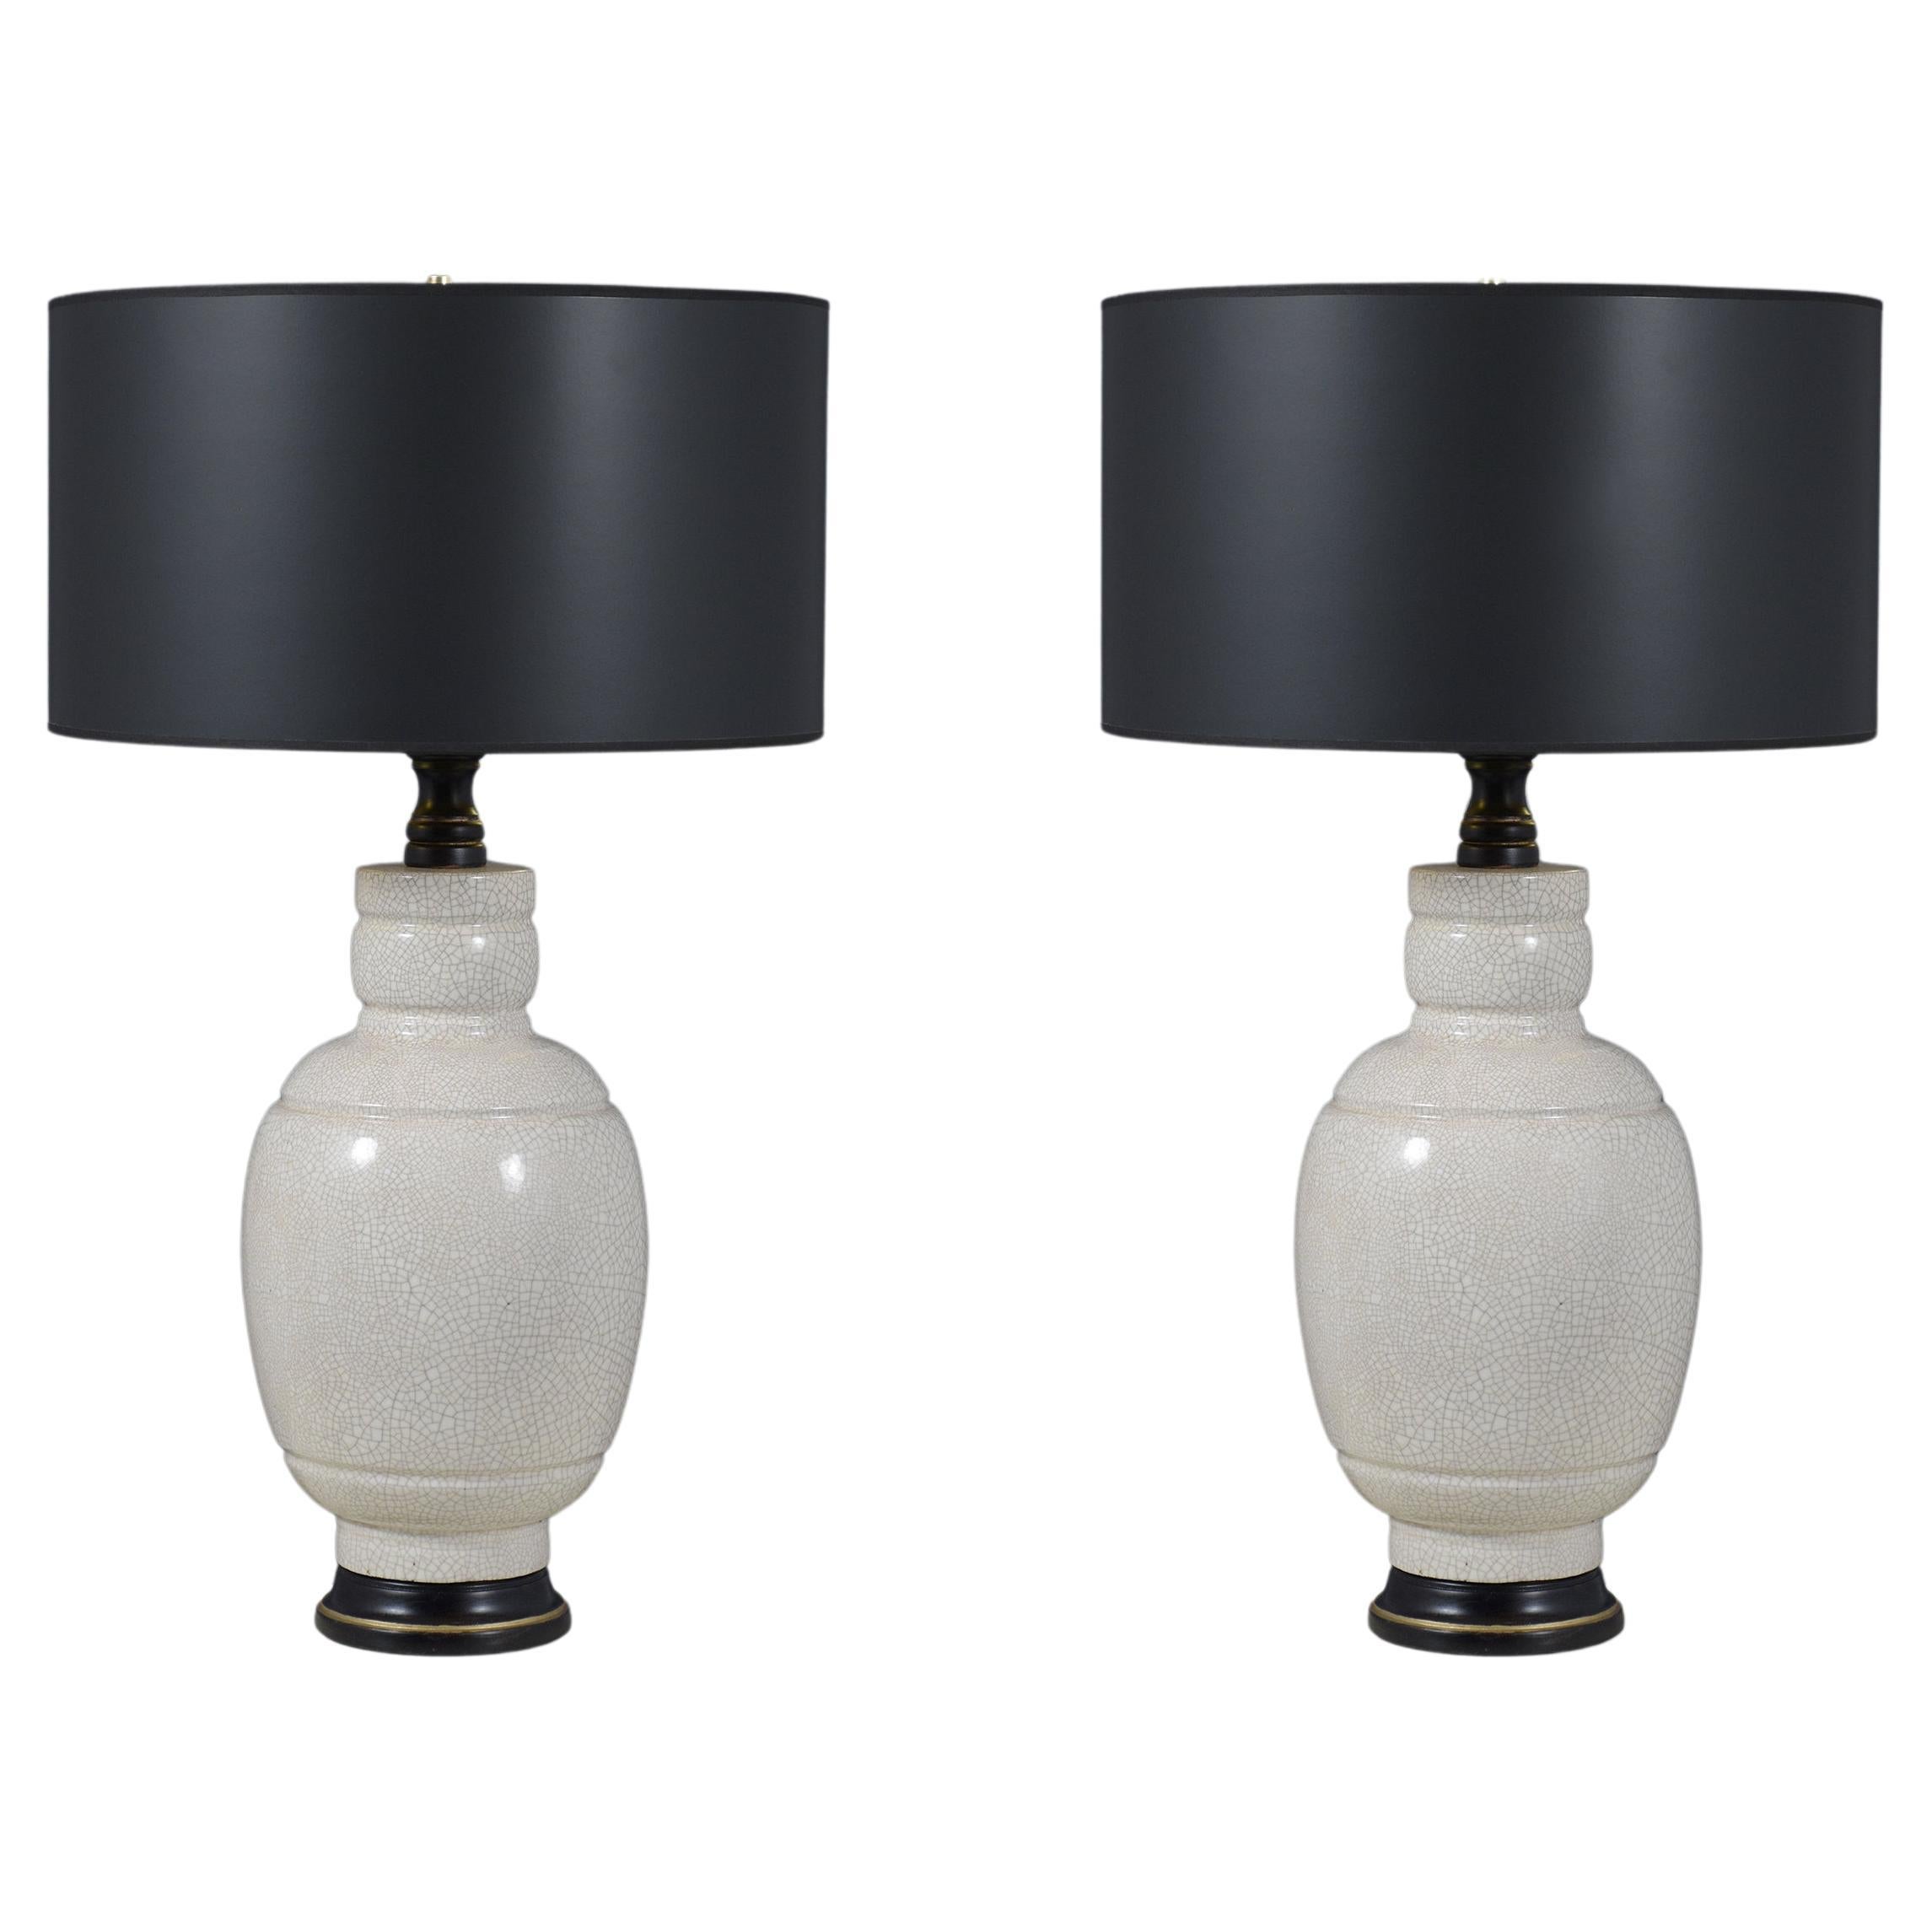 1960s Vintage Ceramic Table Lamps: Restored Elegance Meets Modern Chic For Sale